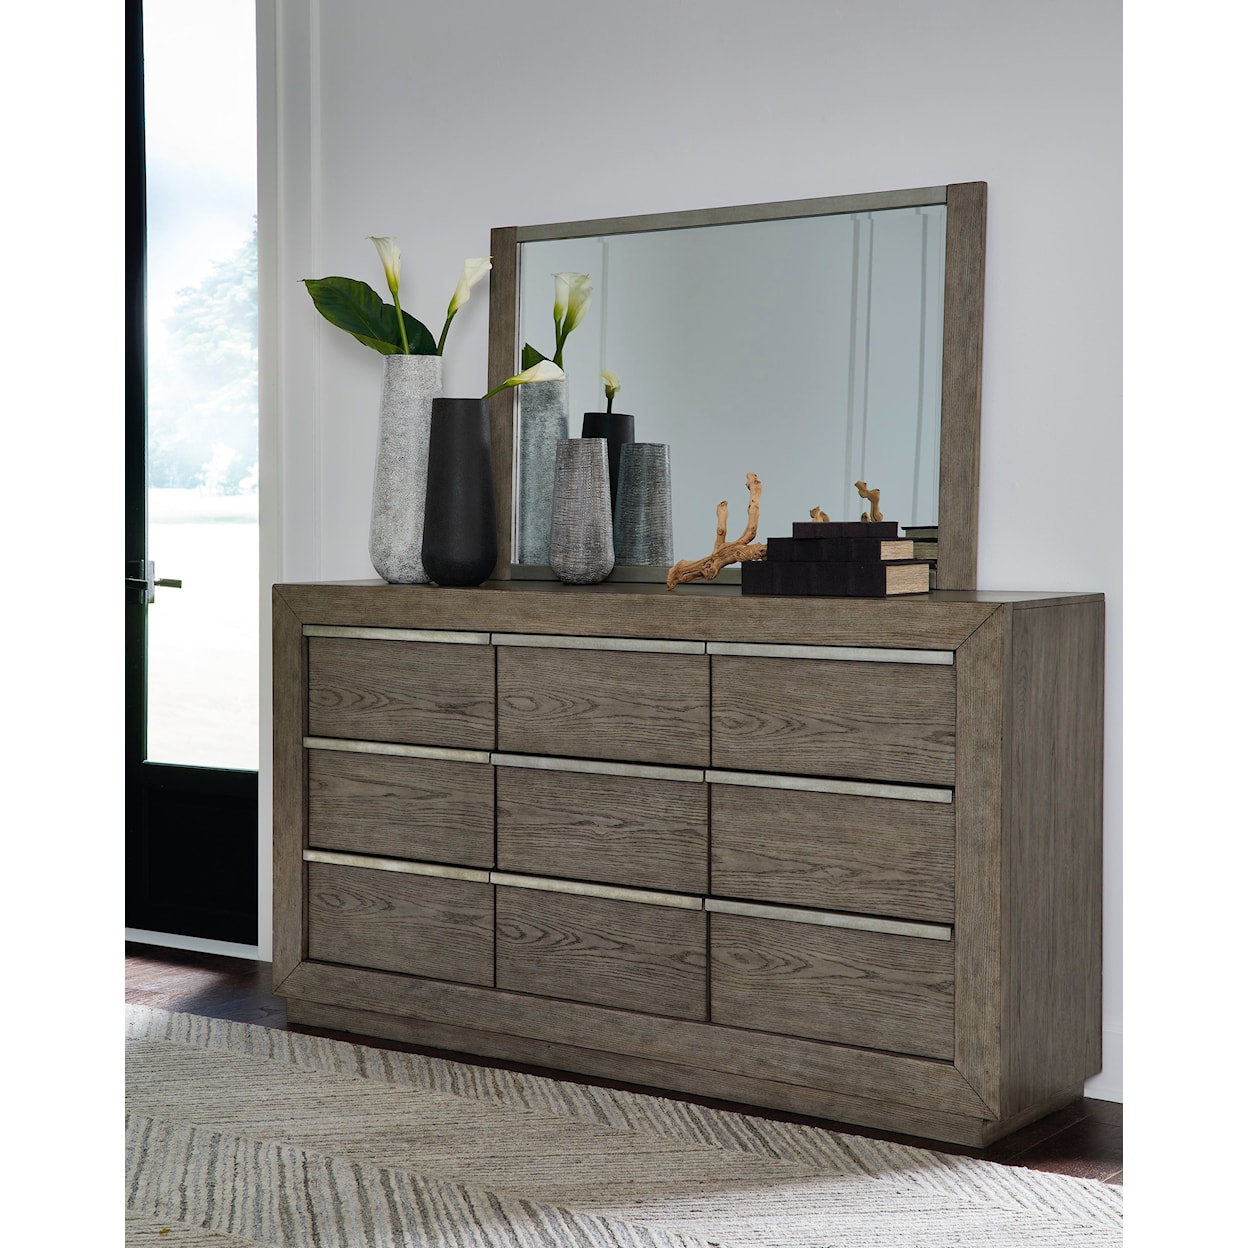 Ashley Furniture Benchcraft Anibecca Dresser and Mirror